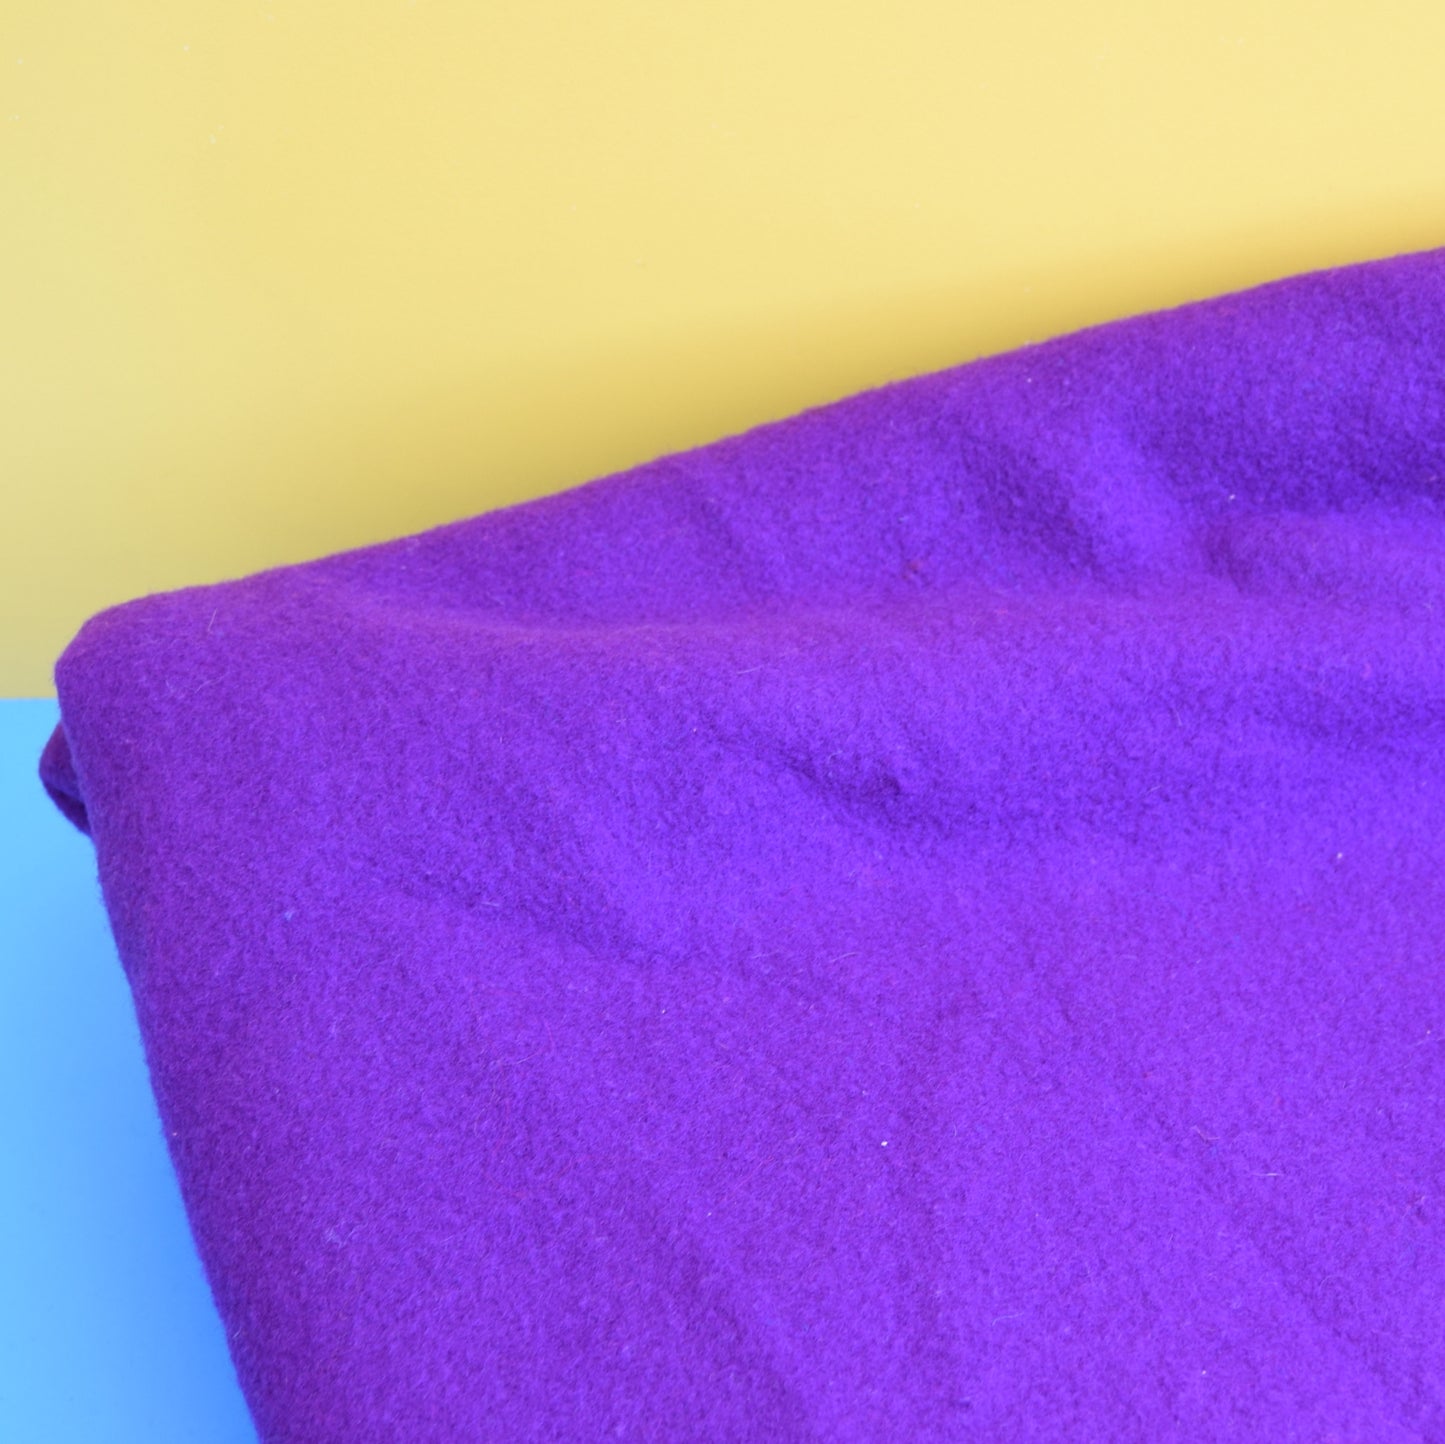 Vintage 1960s Merino Wool Blanket / Throw - Vibrant Purple